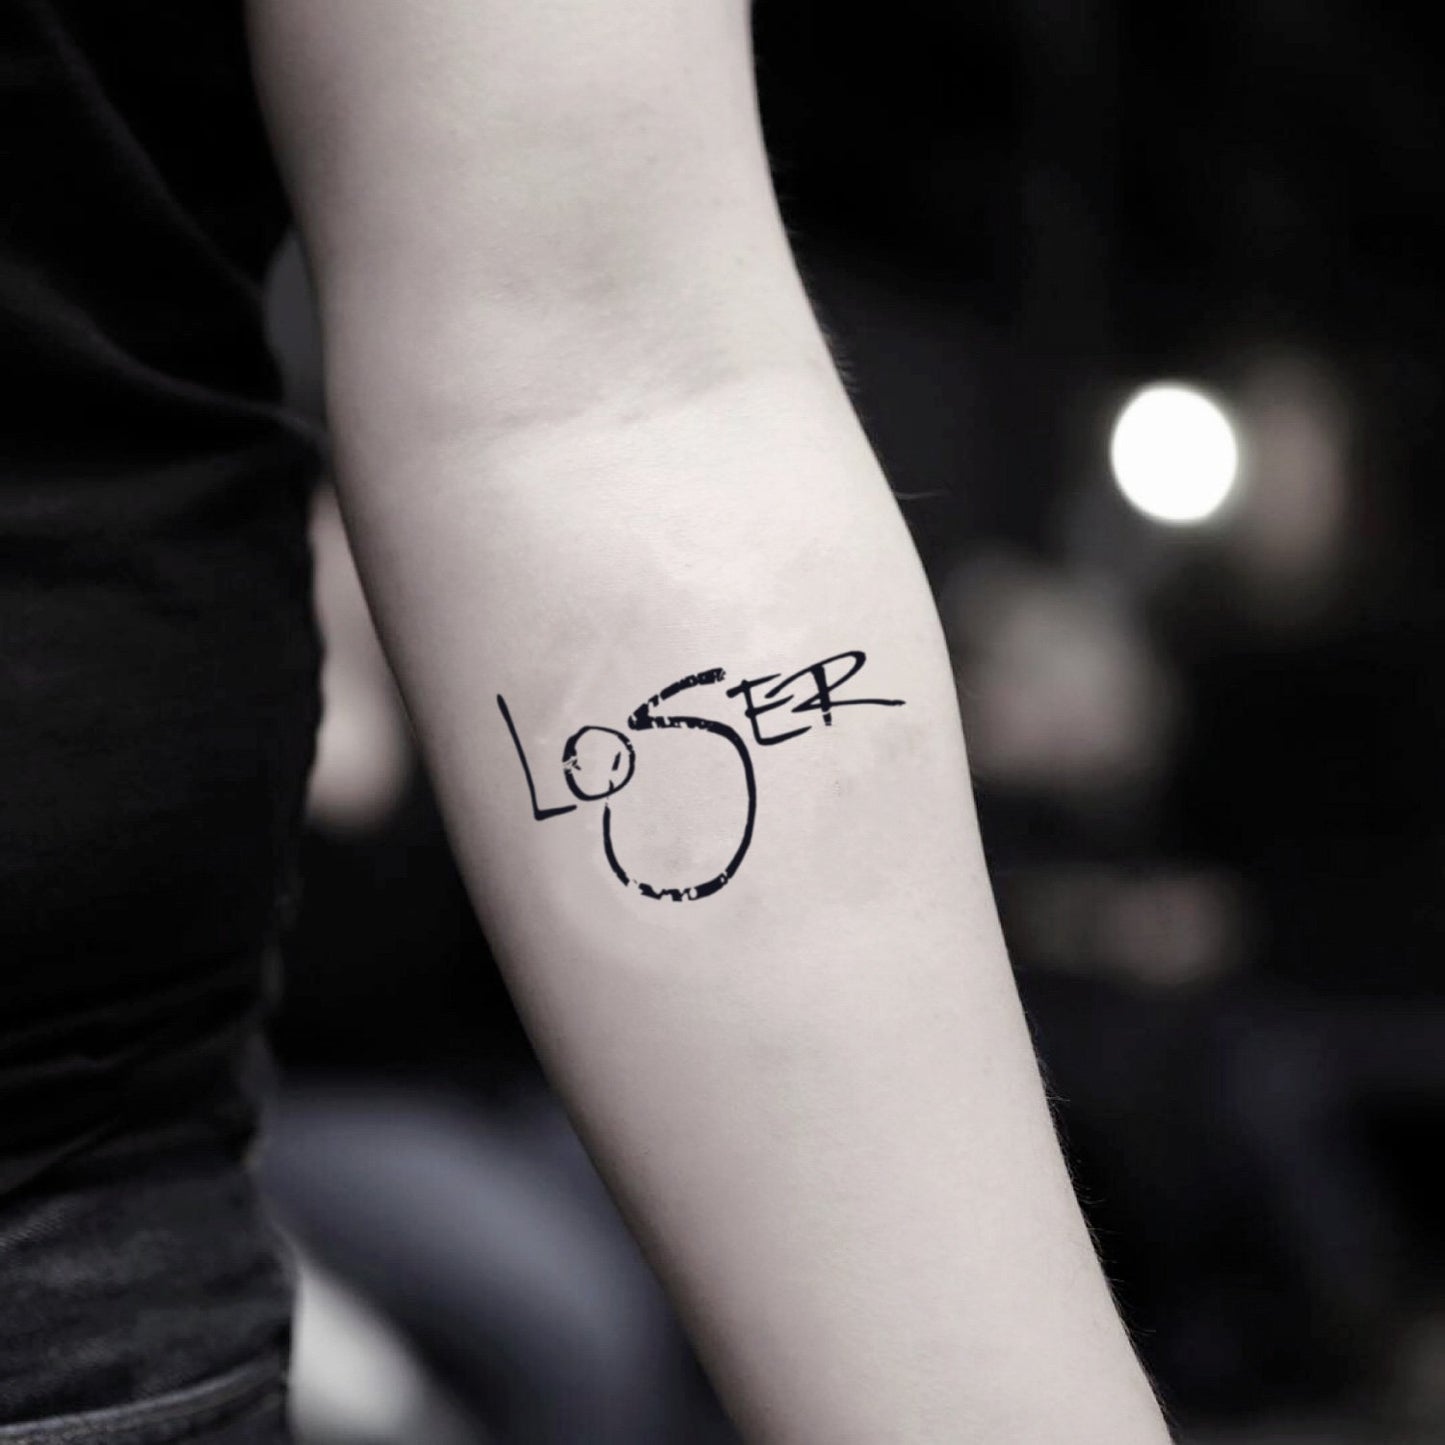 fake small loser lettering temporary tattoo sticker design idea on inner arm